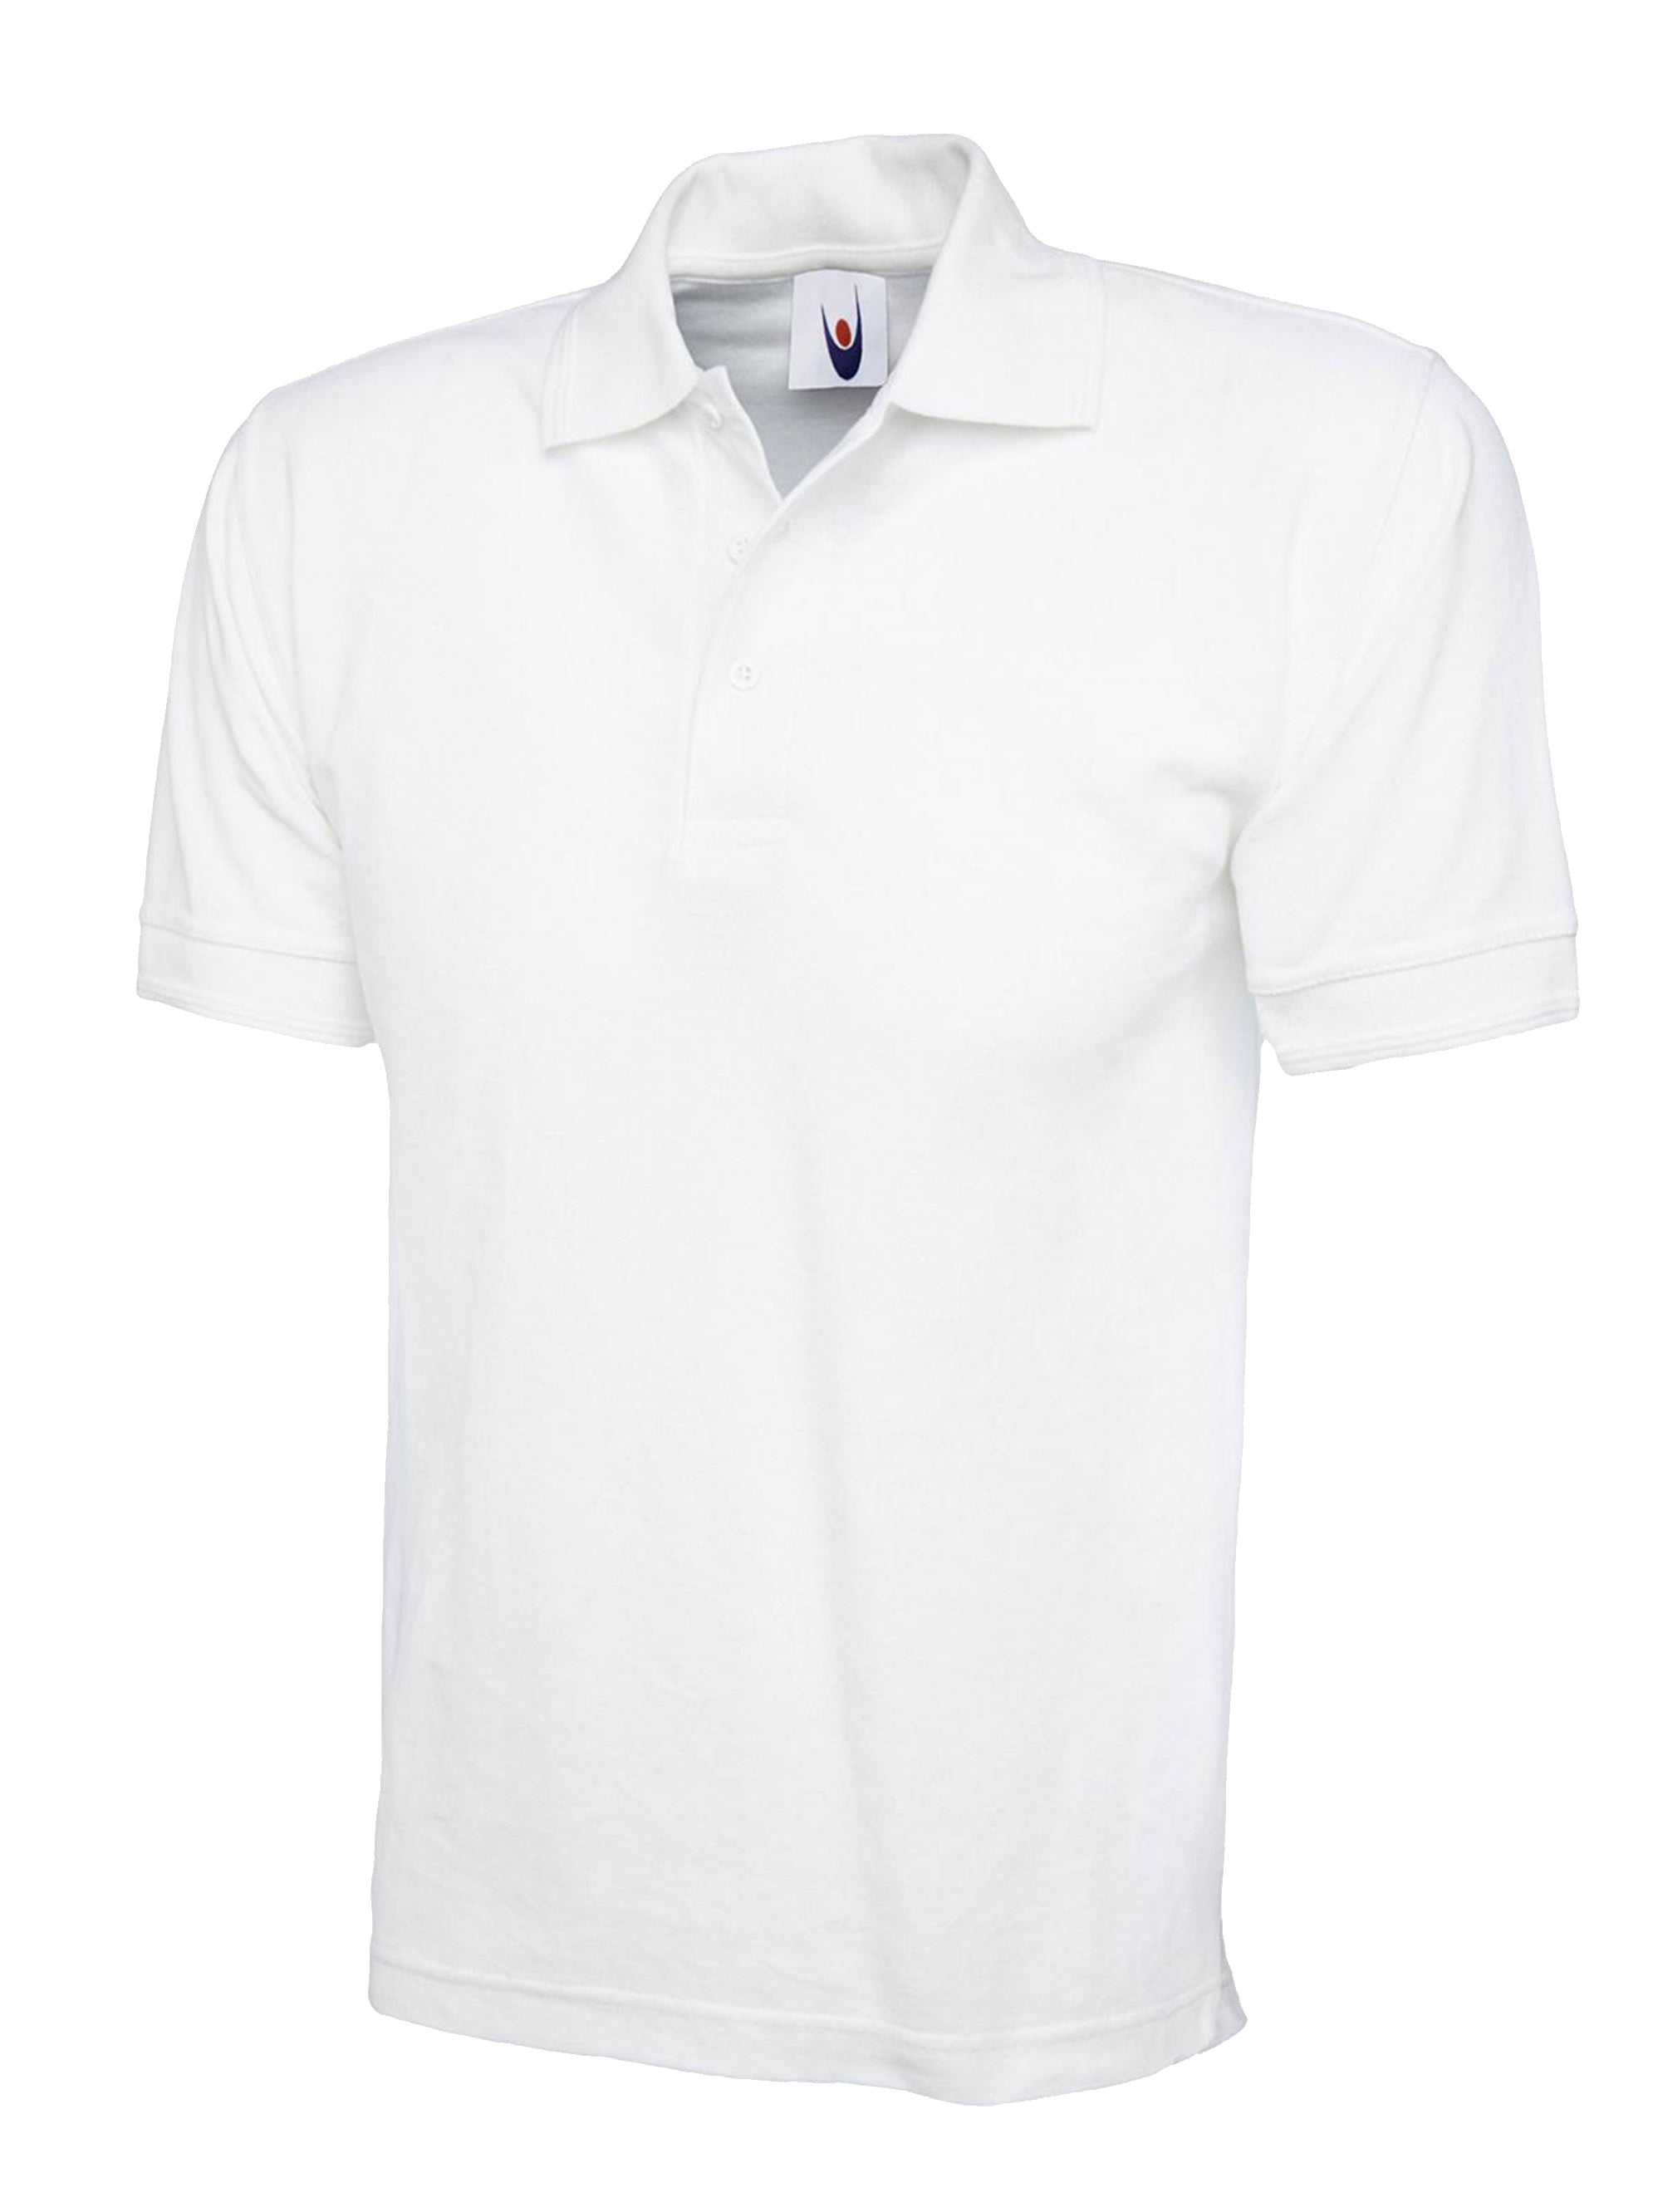 Uneek Ultimate Cotton Poloshirt UC104 - White